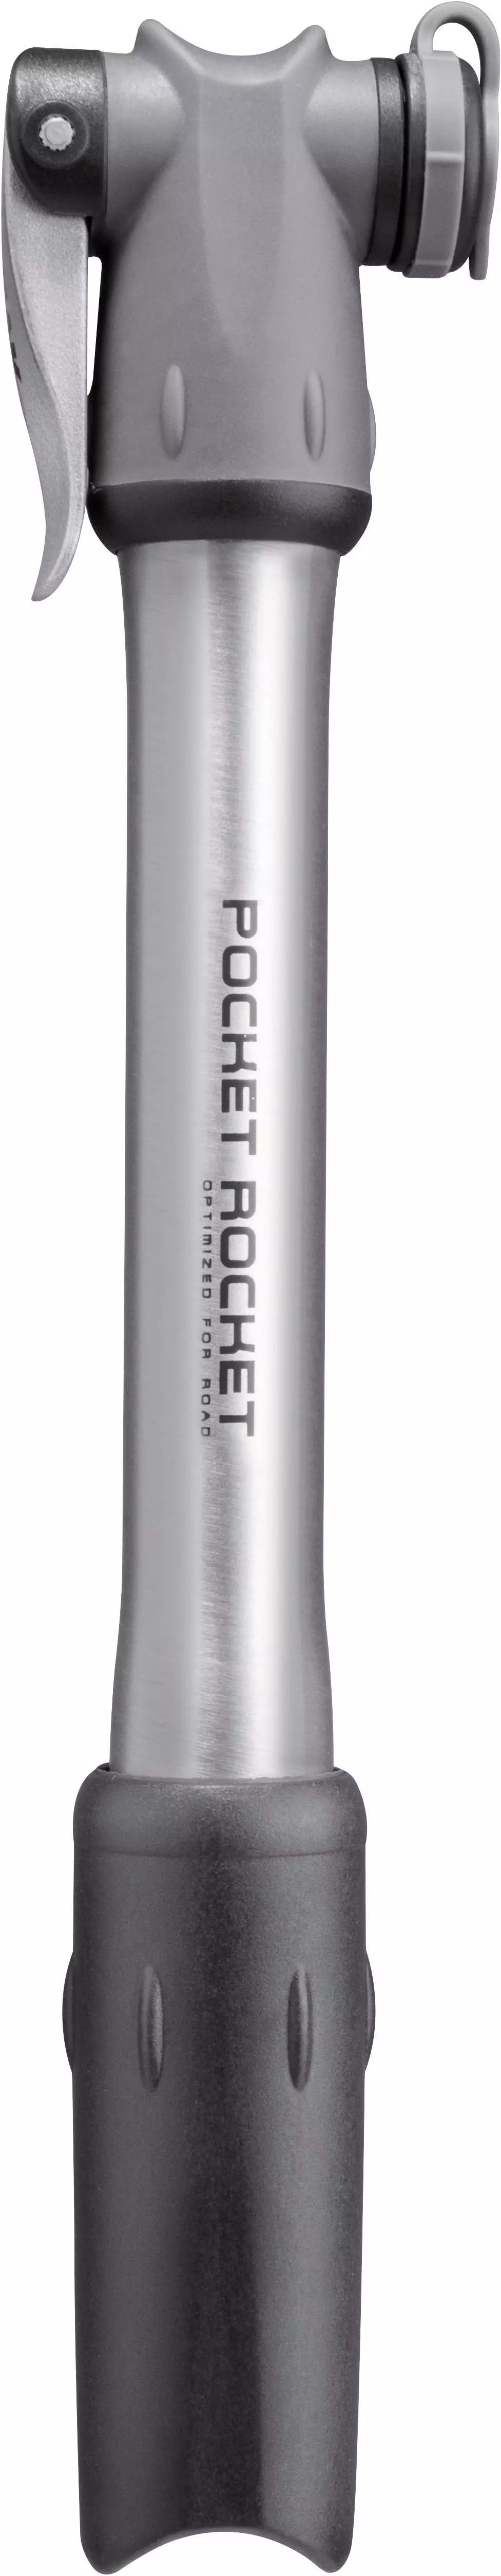 pocket rocket pump